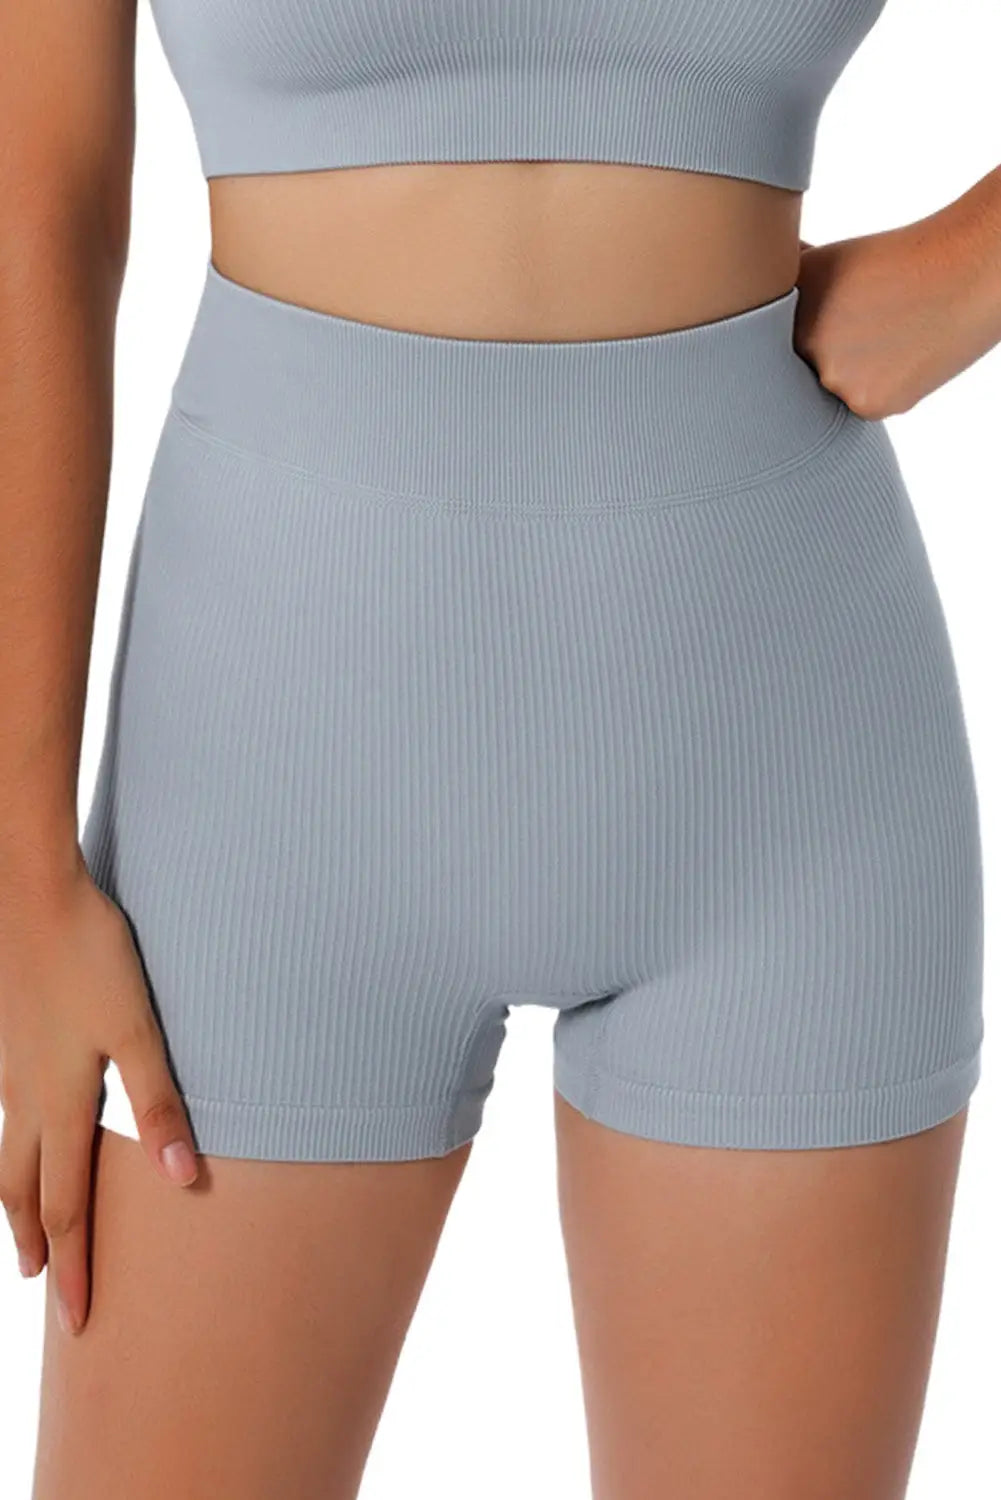 Gray peach hip fitness yoga shorts - activewear